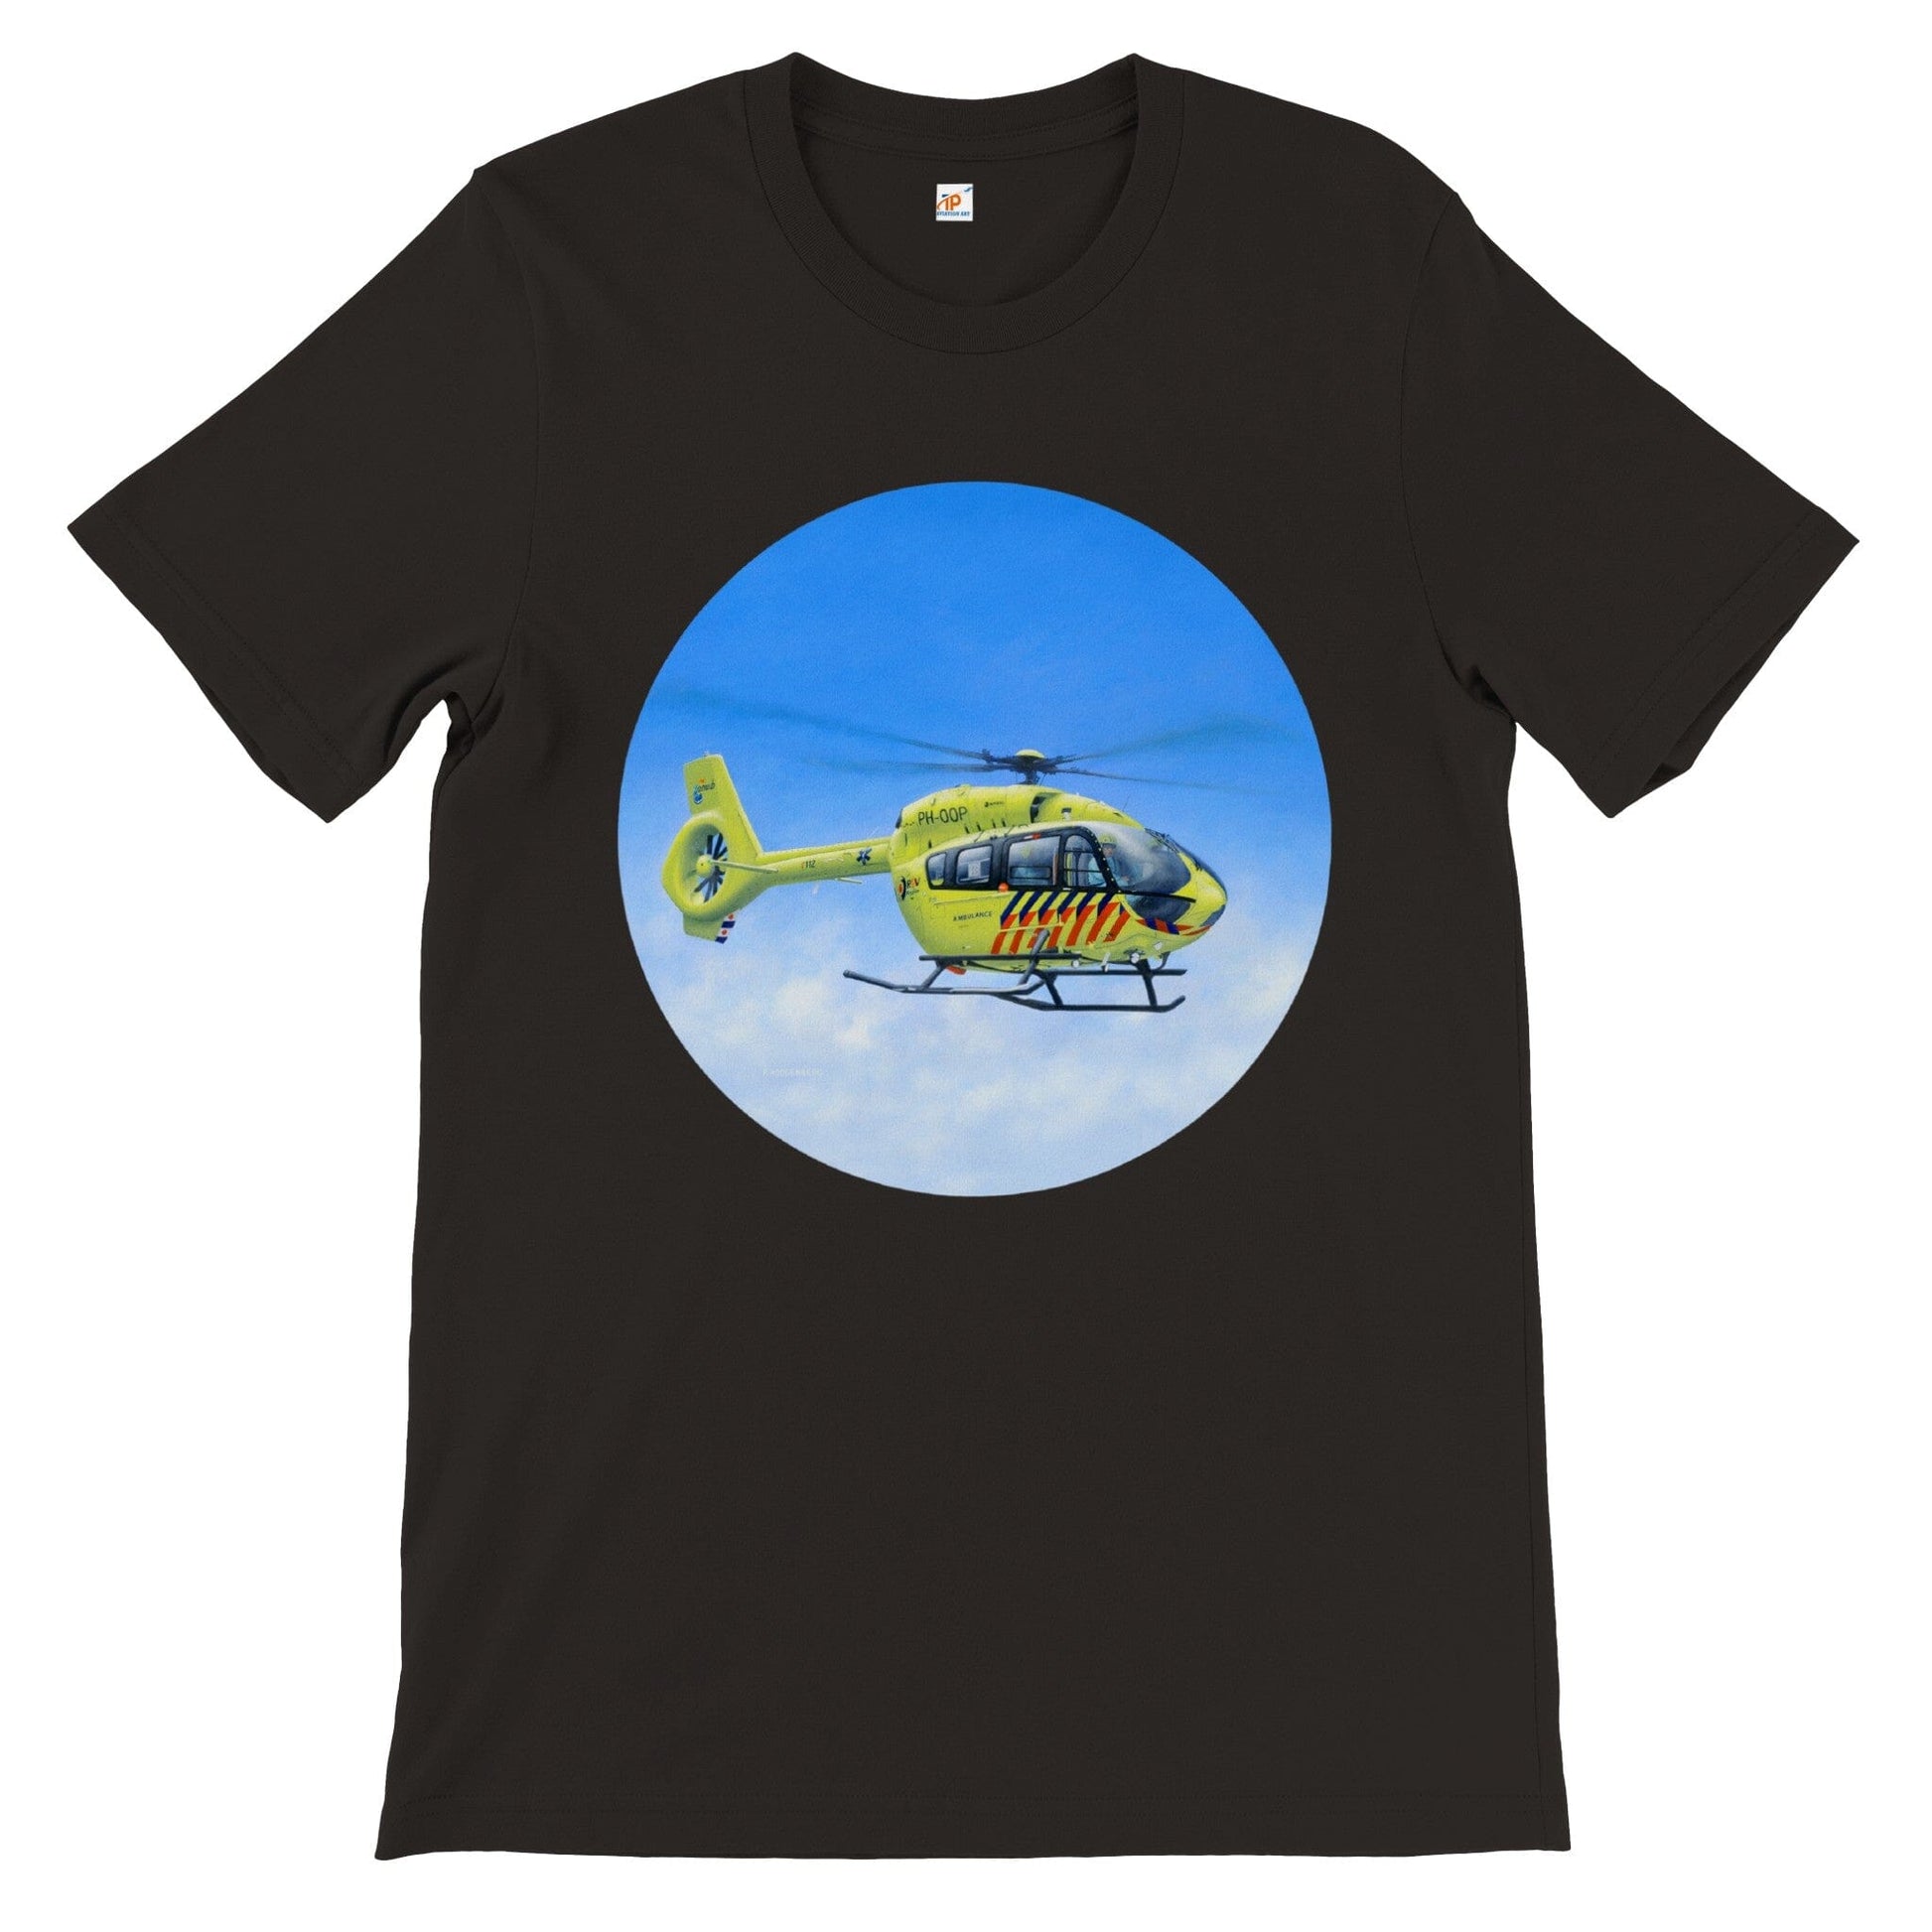 Peter Hoogenberg - T-shirt - Ambulance Helicopter Wadden Islands - Premium Unisex T-shirt TP Aviation Art Black S 